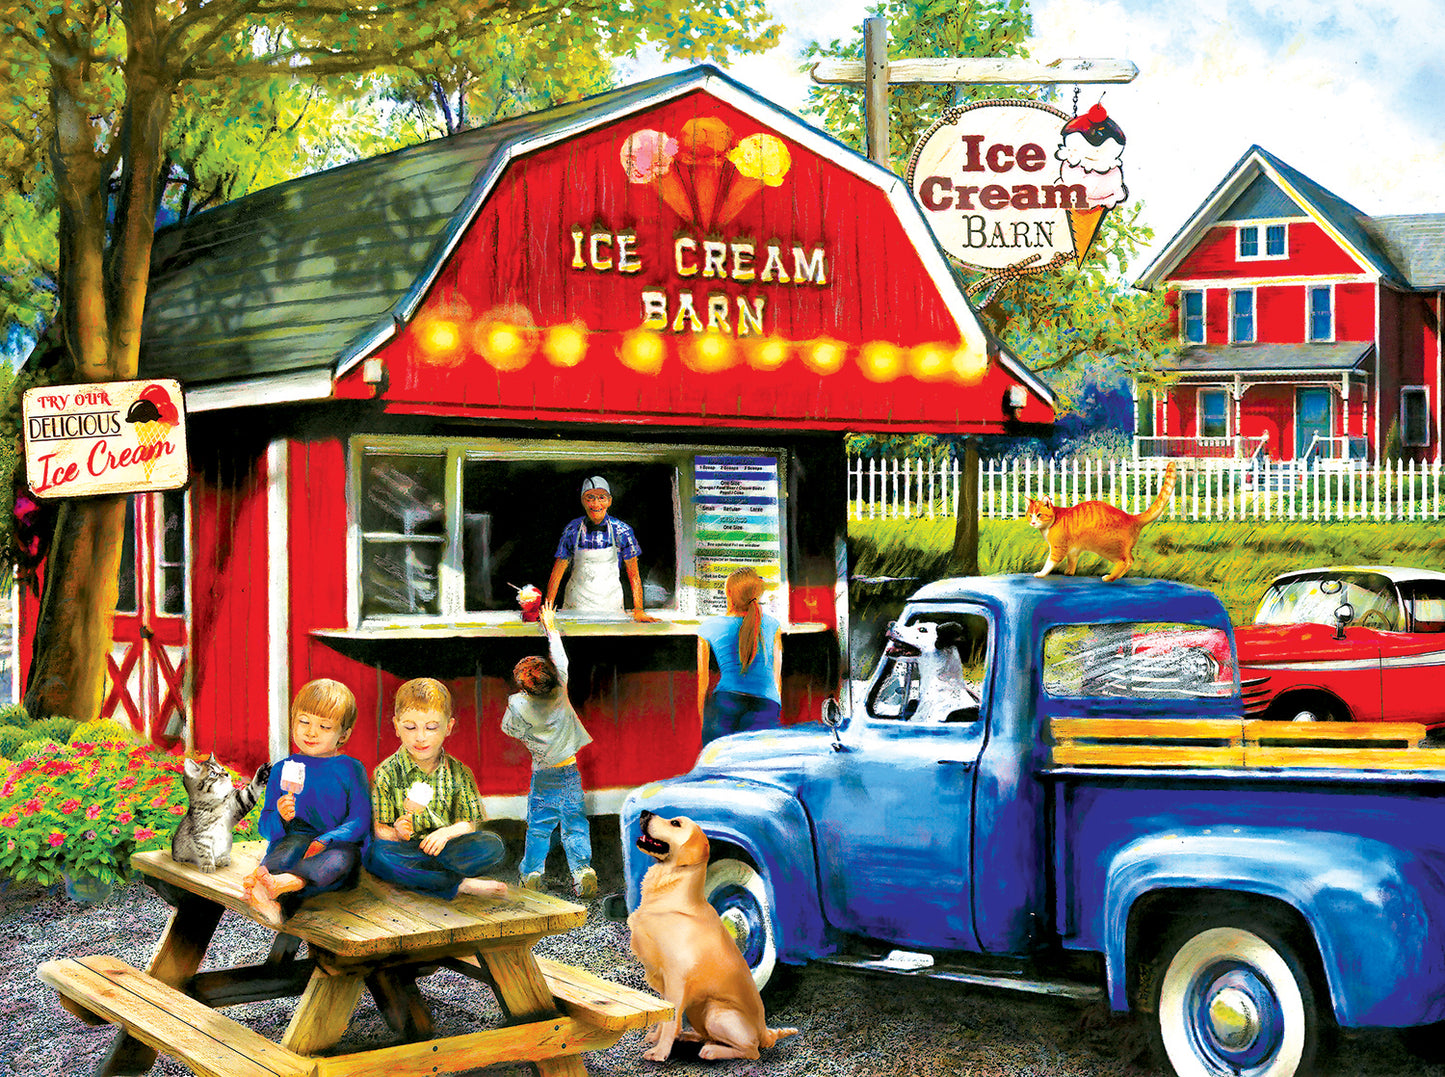 The Ice Cream Barn - 1000 Piece Jigsaw Puzzle